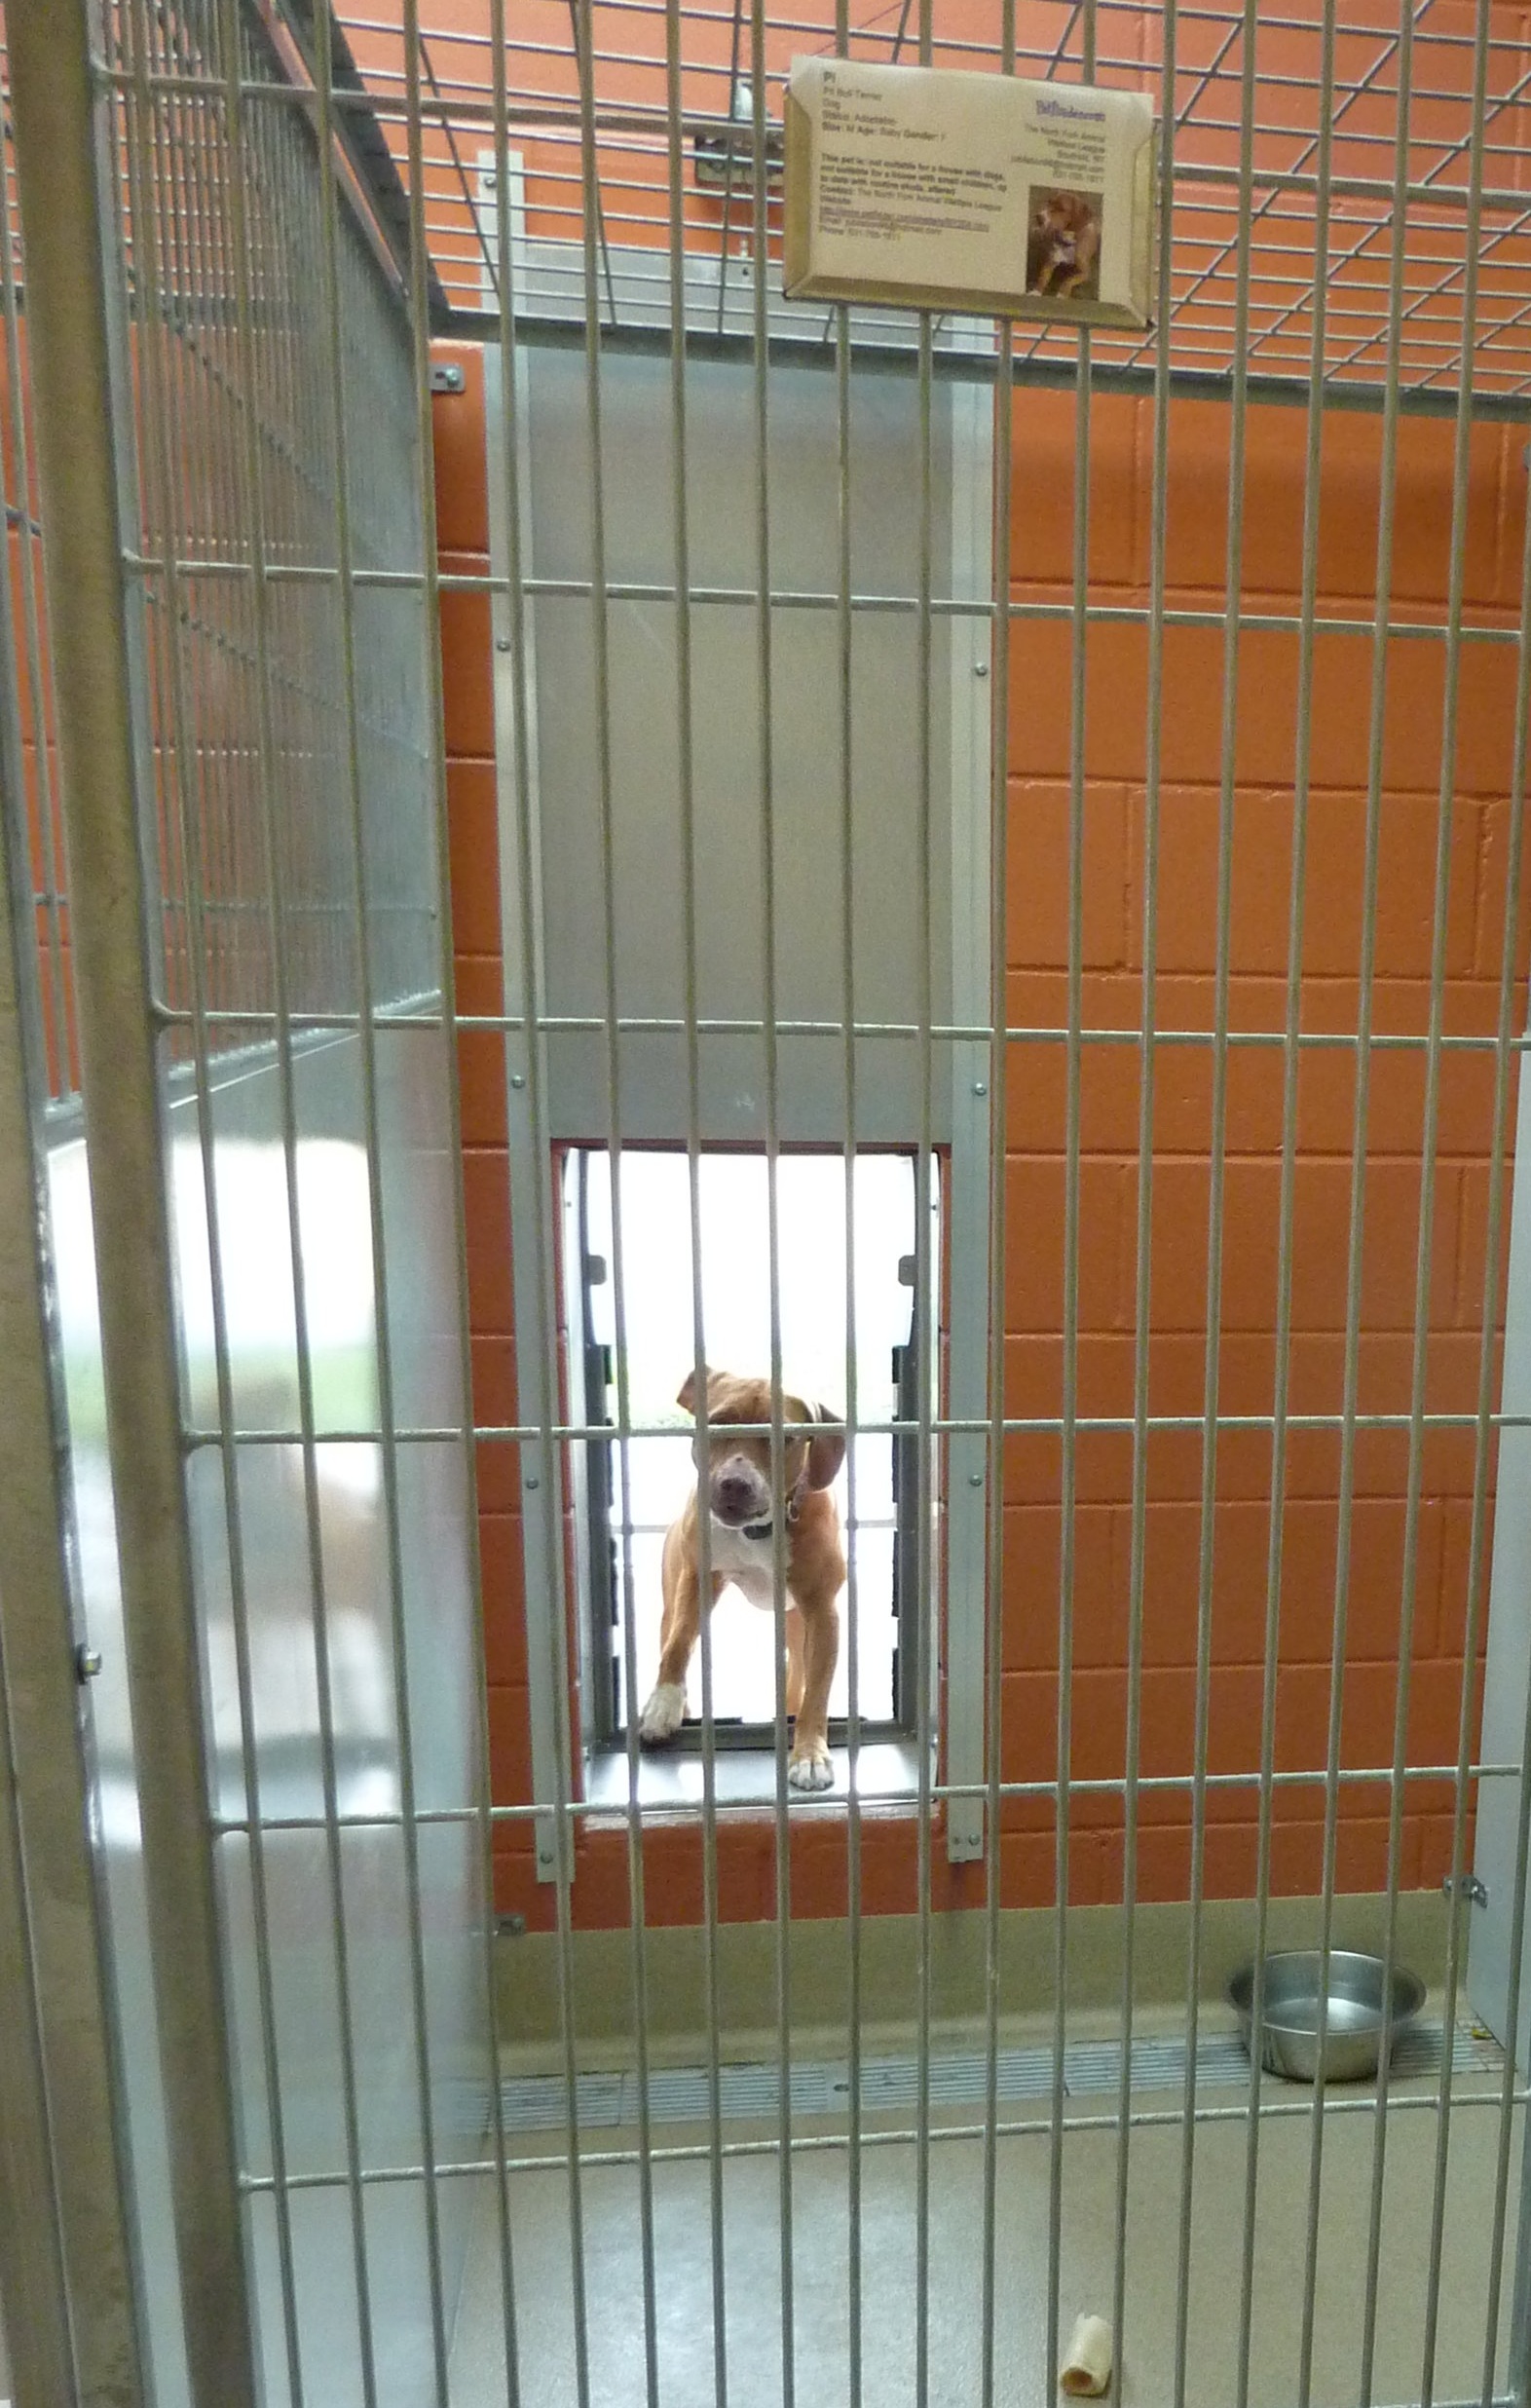  Freedom dog using his door  